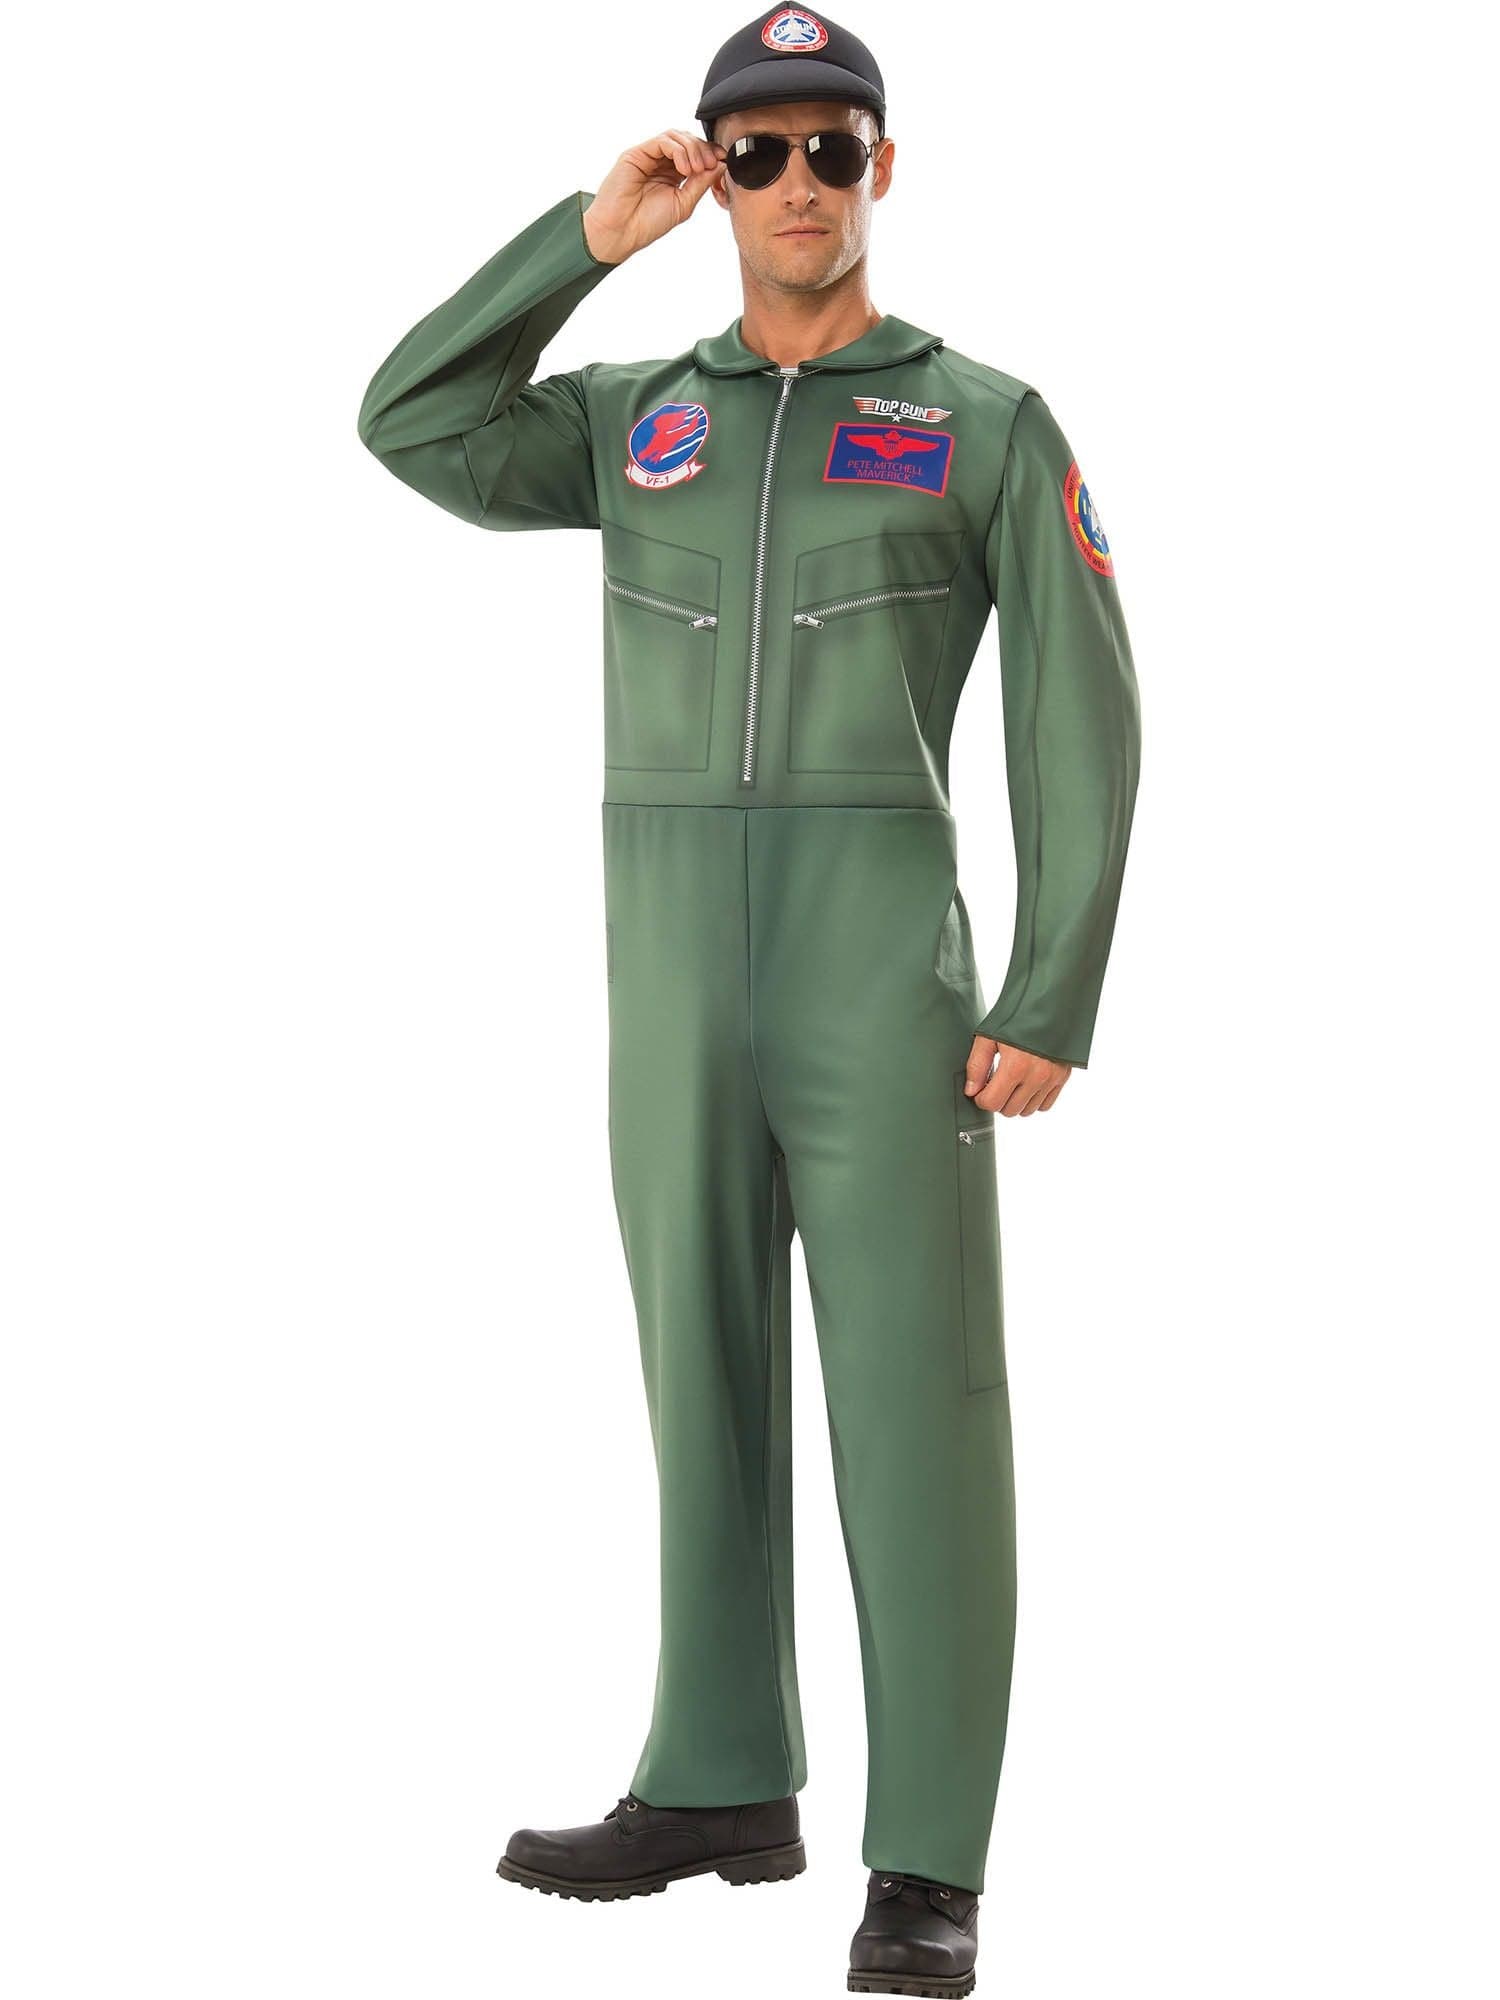 Adult Top Gun Costume - costumes.com